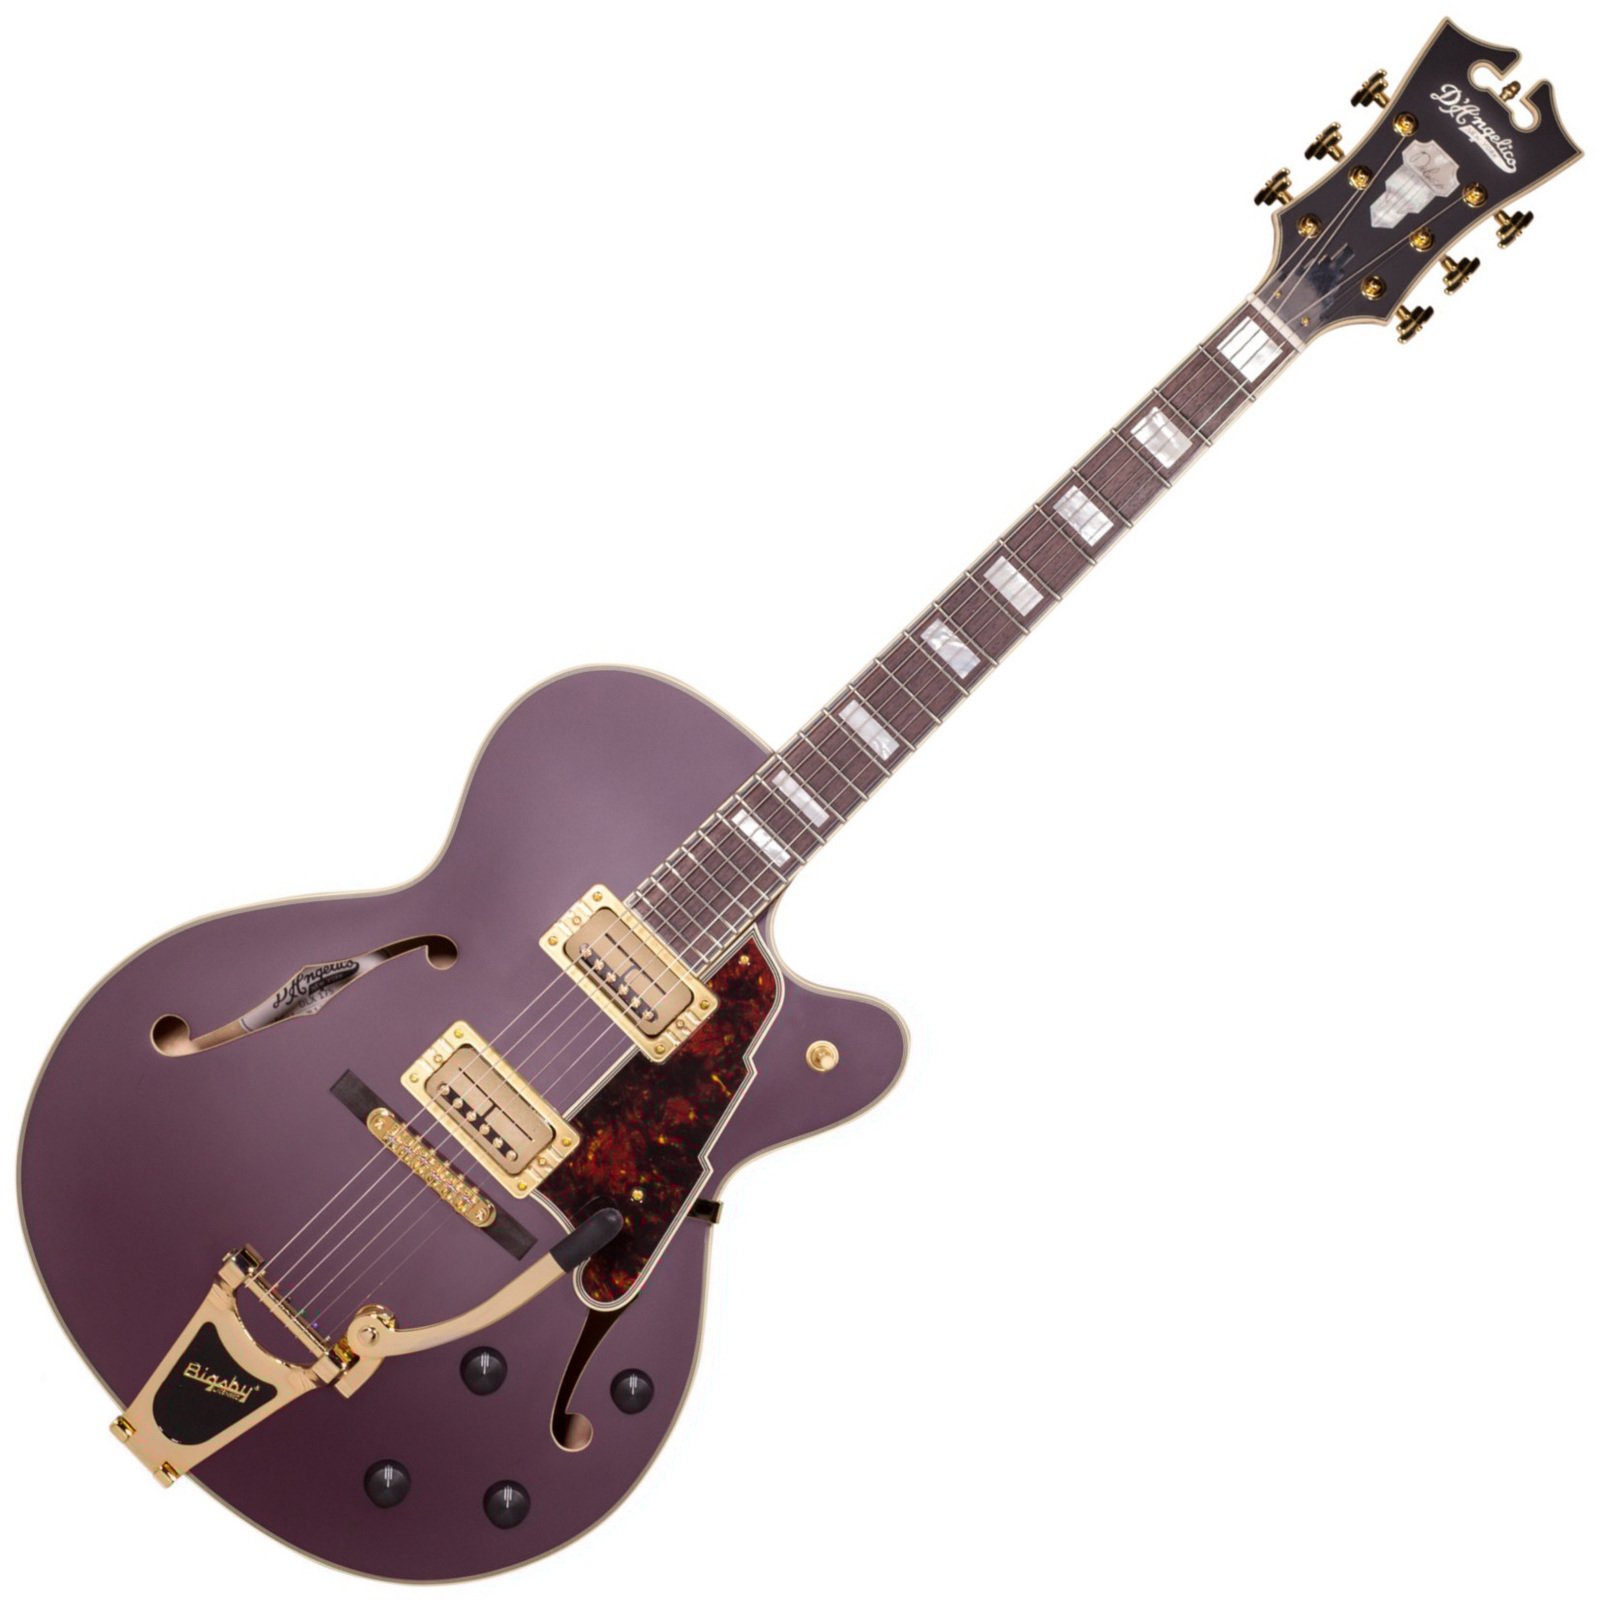 Semiakustická kytara D'Angelico Deluxe 175 Matte Plum